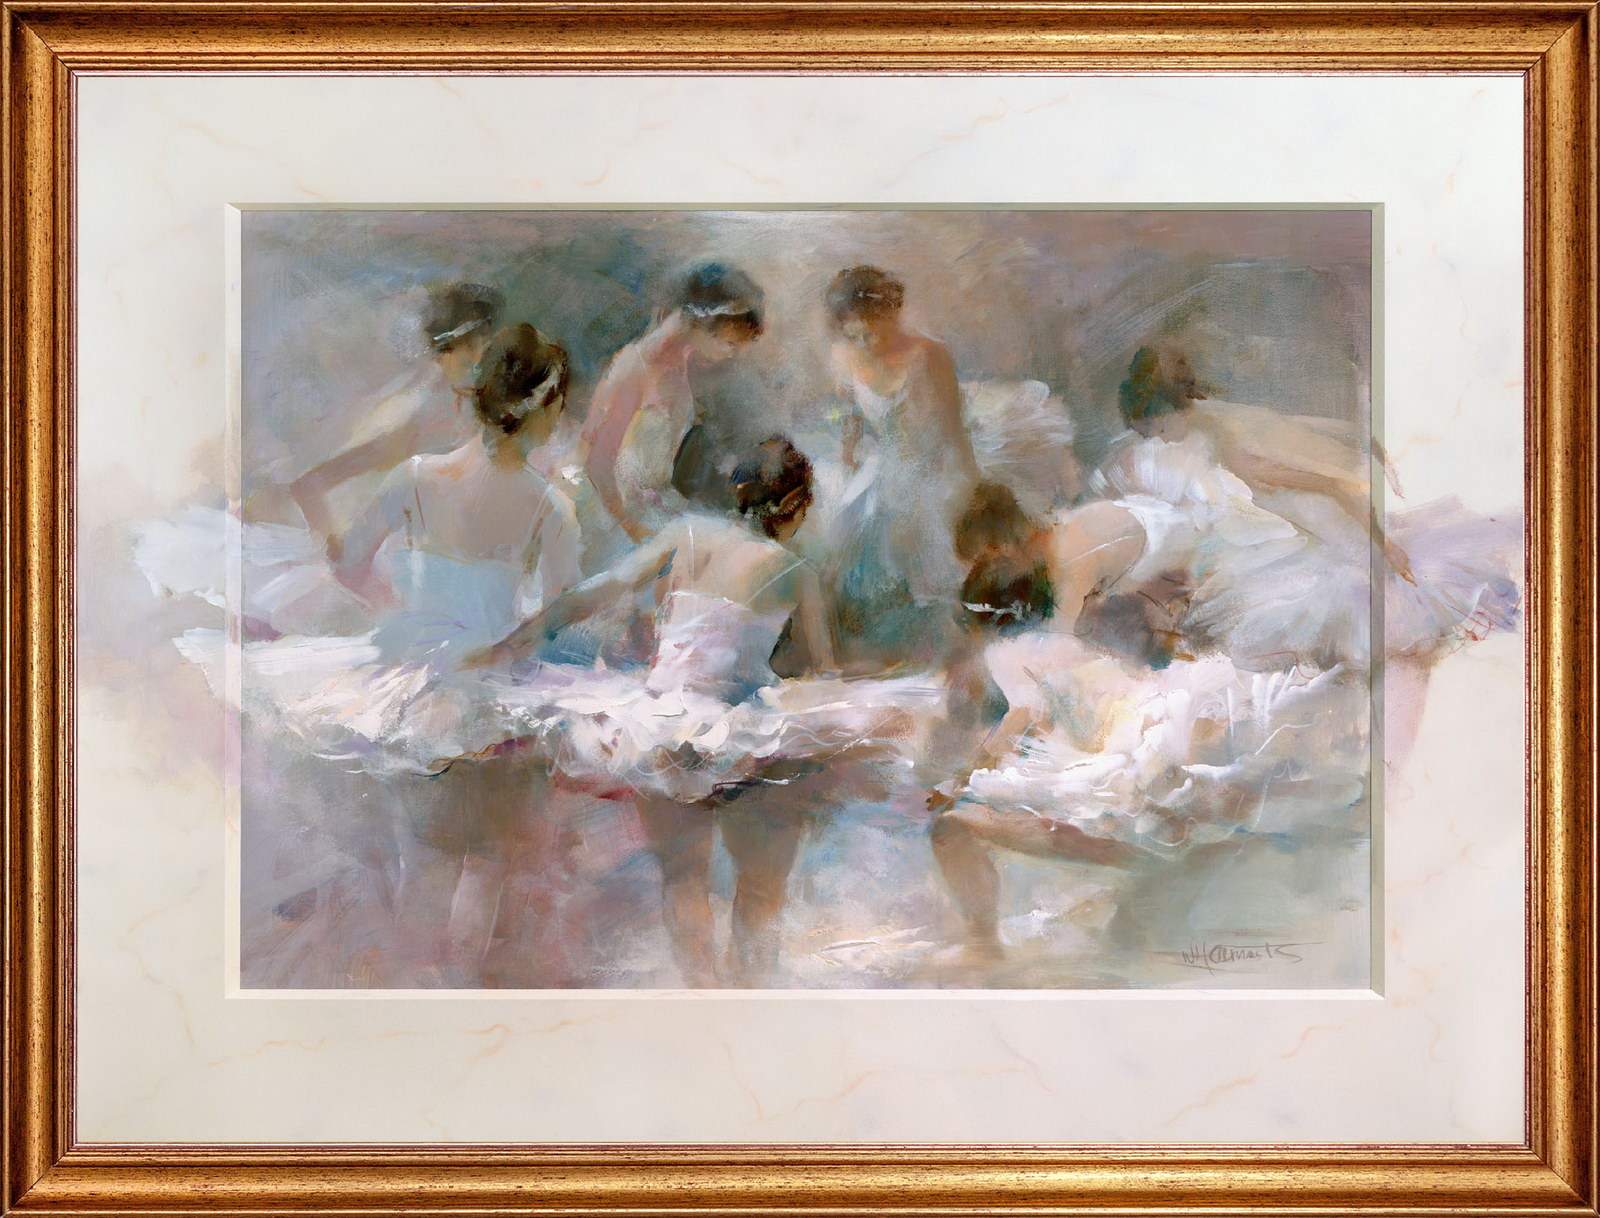 Картина на холсте, "Балерины", 80х60 см., Willem Haenraets. оформлена в багет, Арт. ХВ-х59